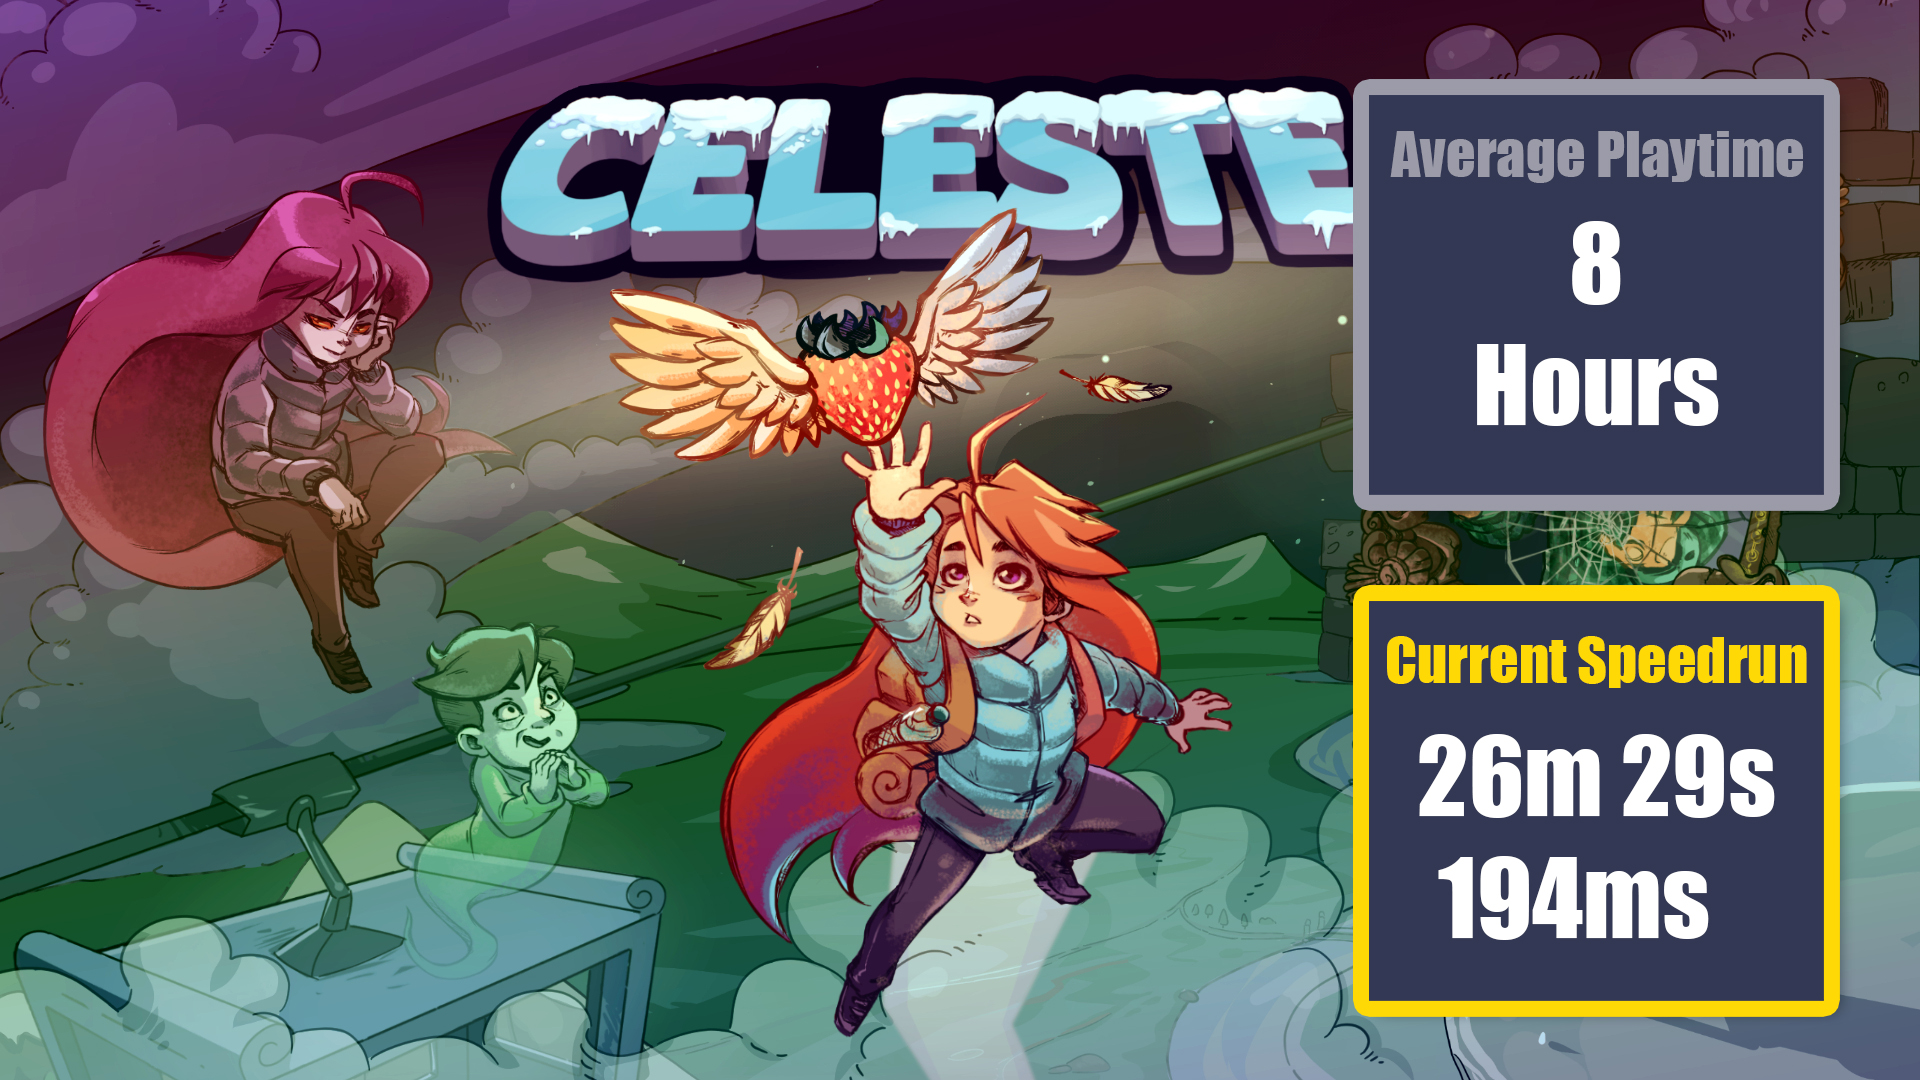 fast video game speed runs - Celeste